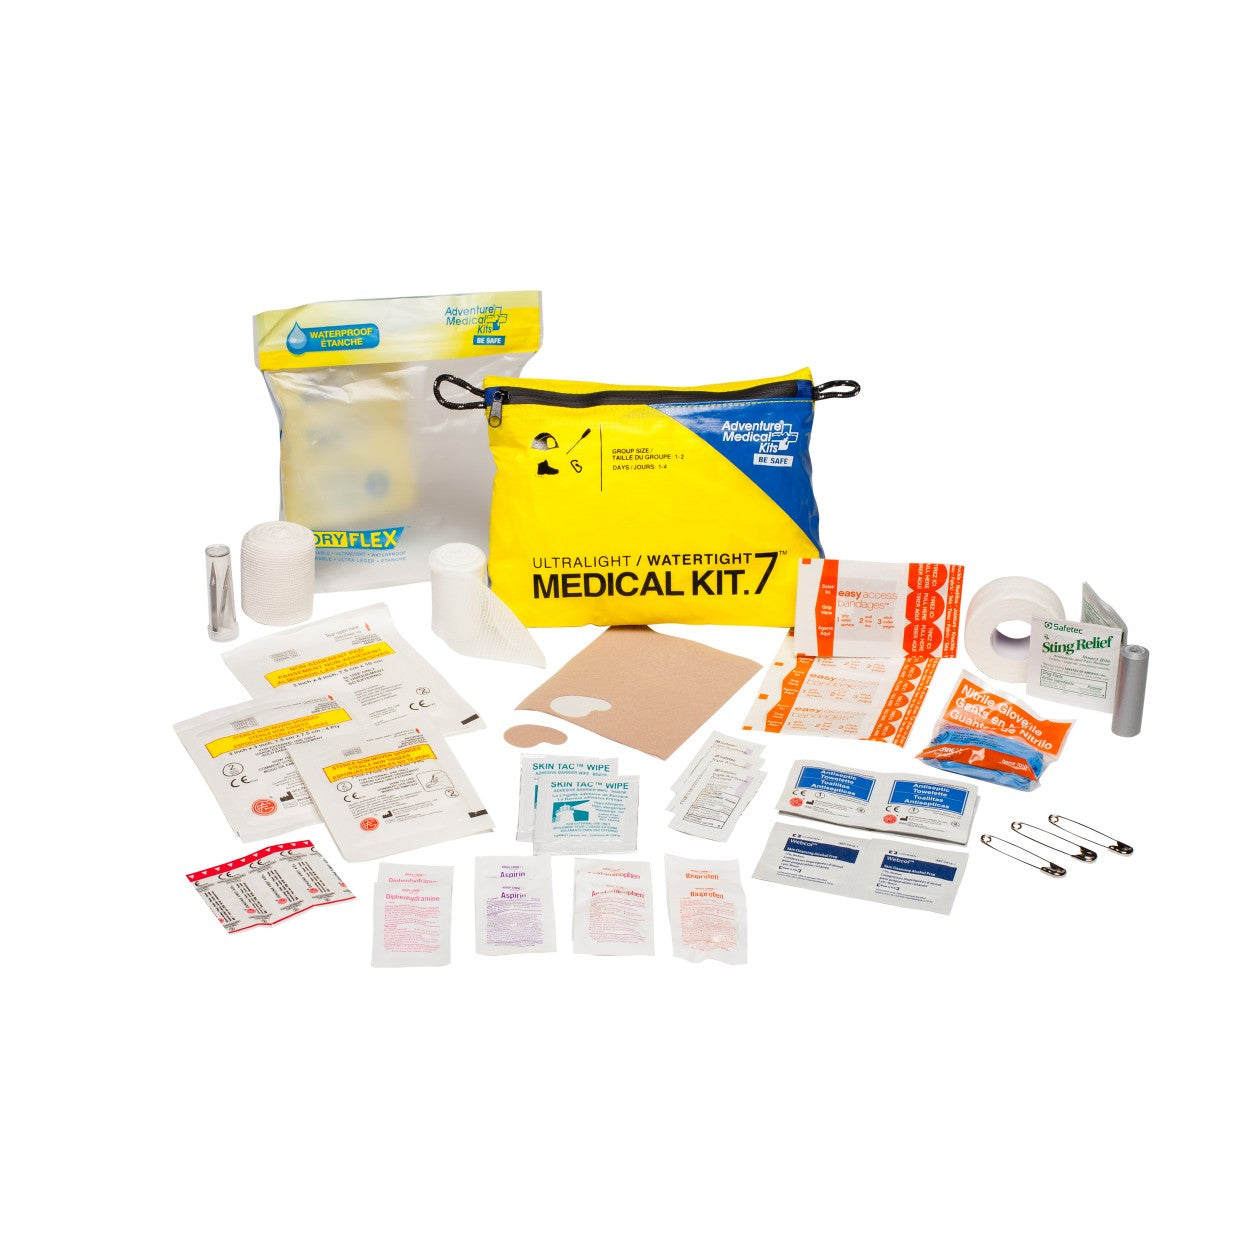 Ultralight/Watertight Medical Kit 7